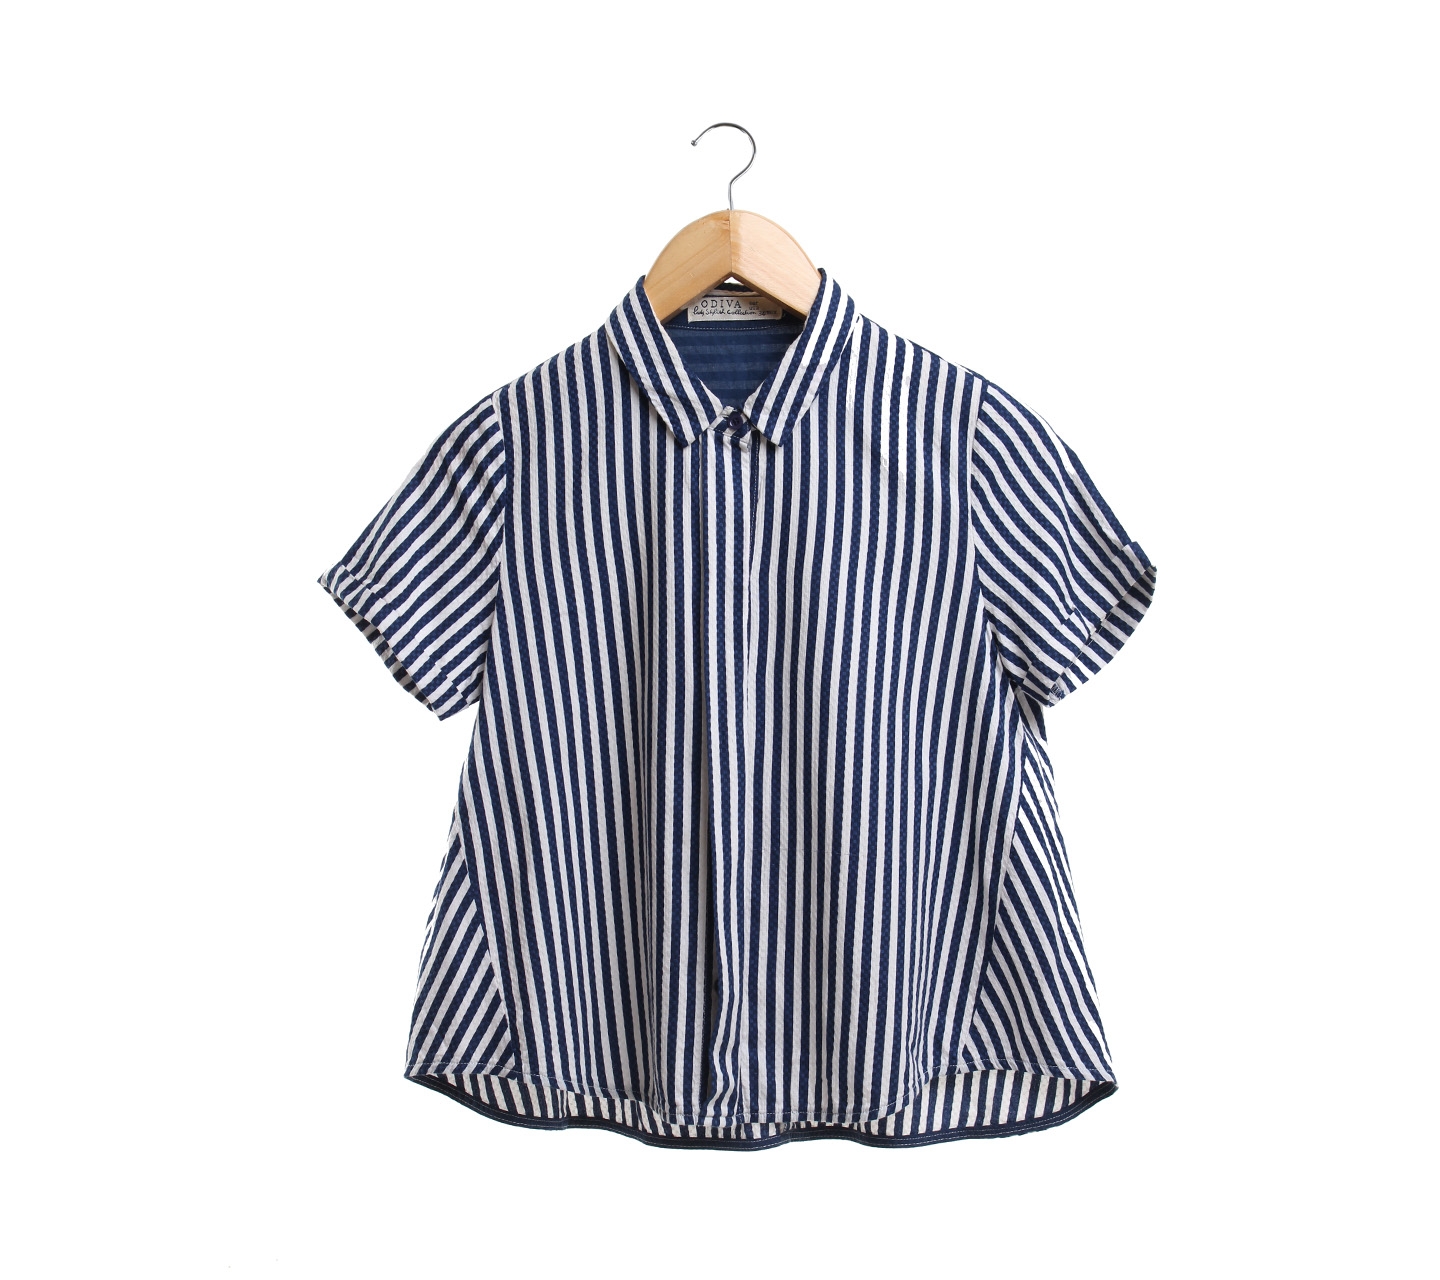 Odiva Blue And White Striped Shirt